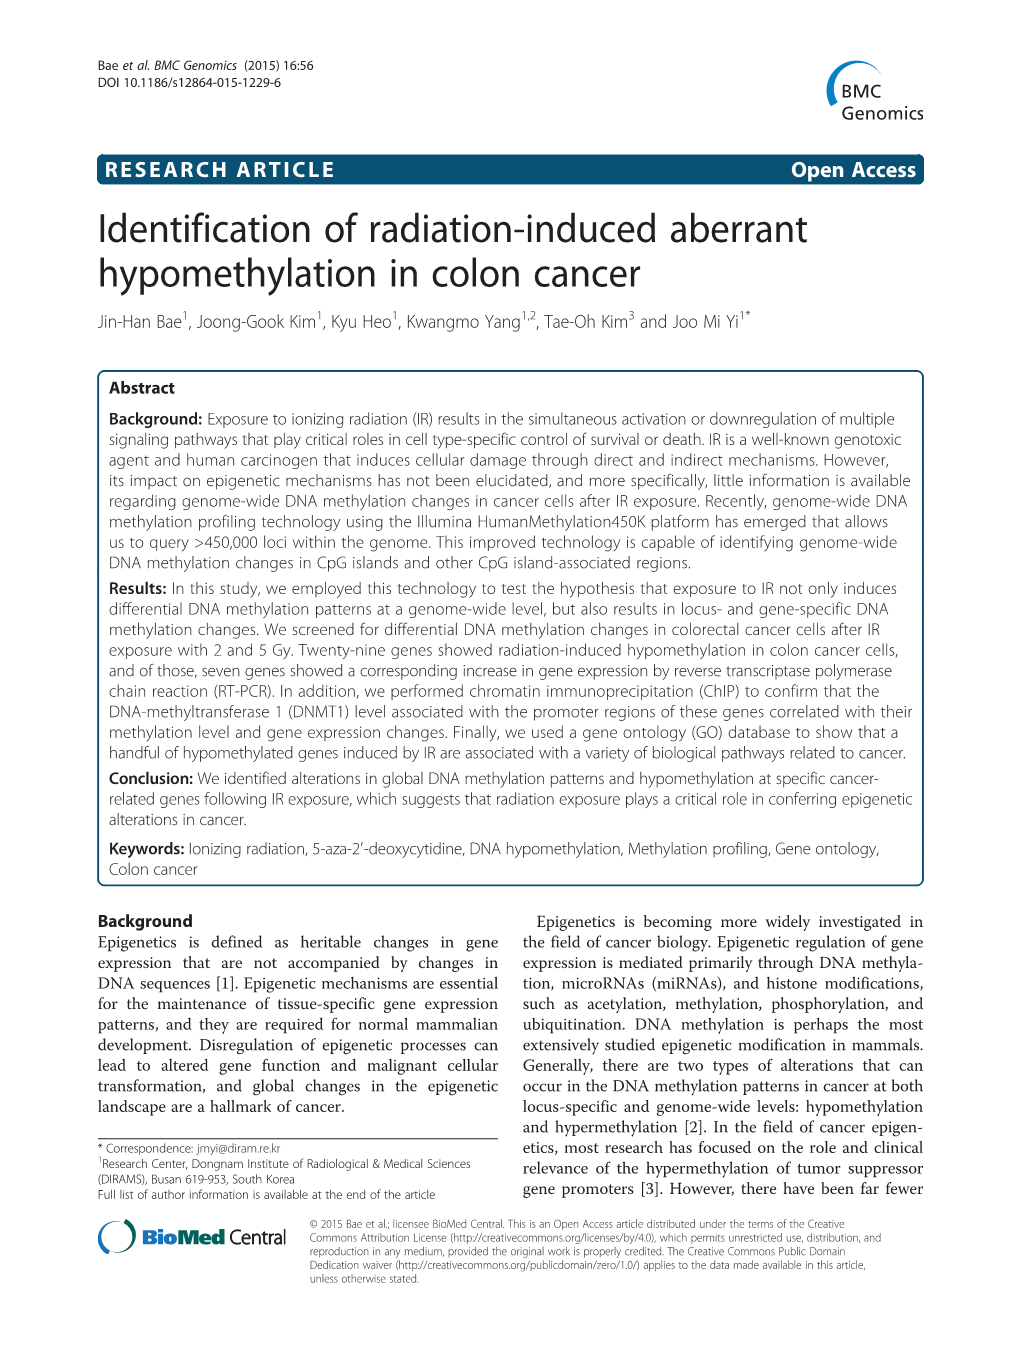 Identification of Radiation-Induced Aberrant Hypomethylation in Colon Cancer Jin-Han Bae1, Joong-Gook Kim1, Kyu Heo1, Kwangmo Yang1,2, Tae-Oh Kim3 and Joo Mi Yi1*